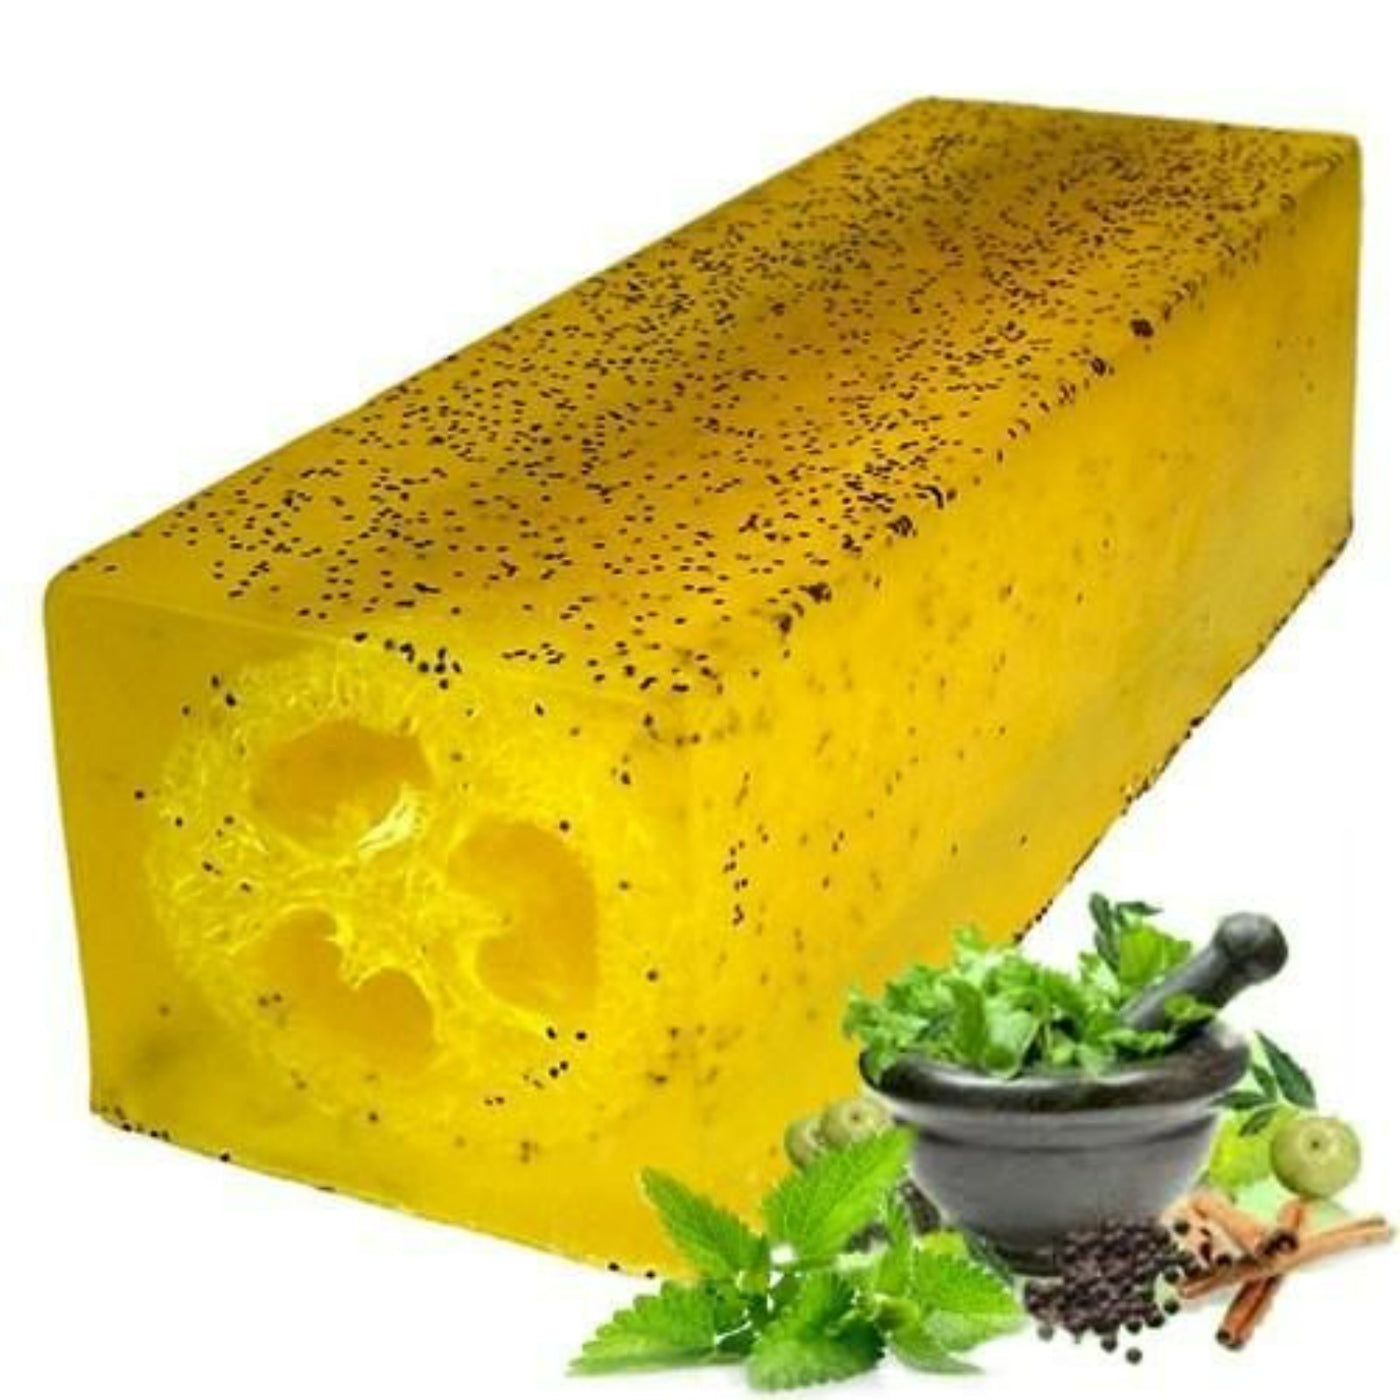 Loofah Exfoliating Soap Loaf - Peppermint & Herb Scrub 1.5 kg.